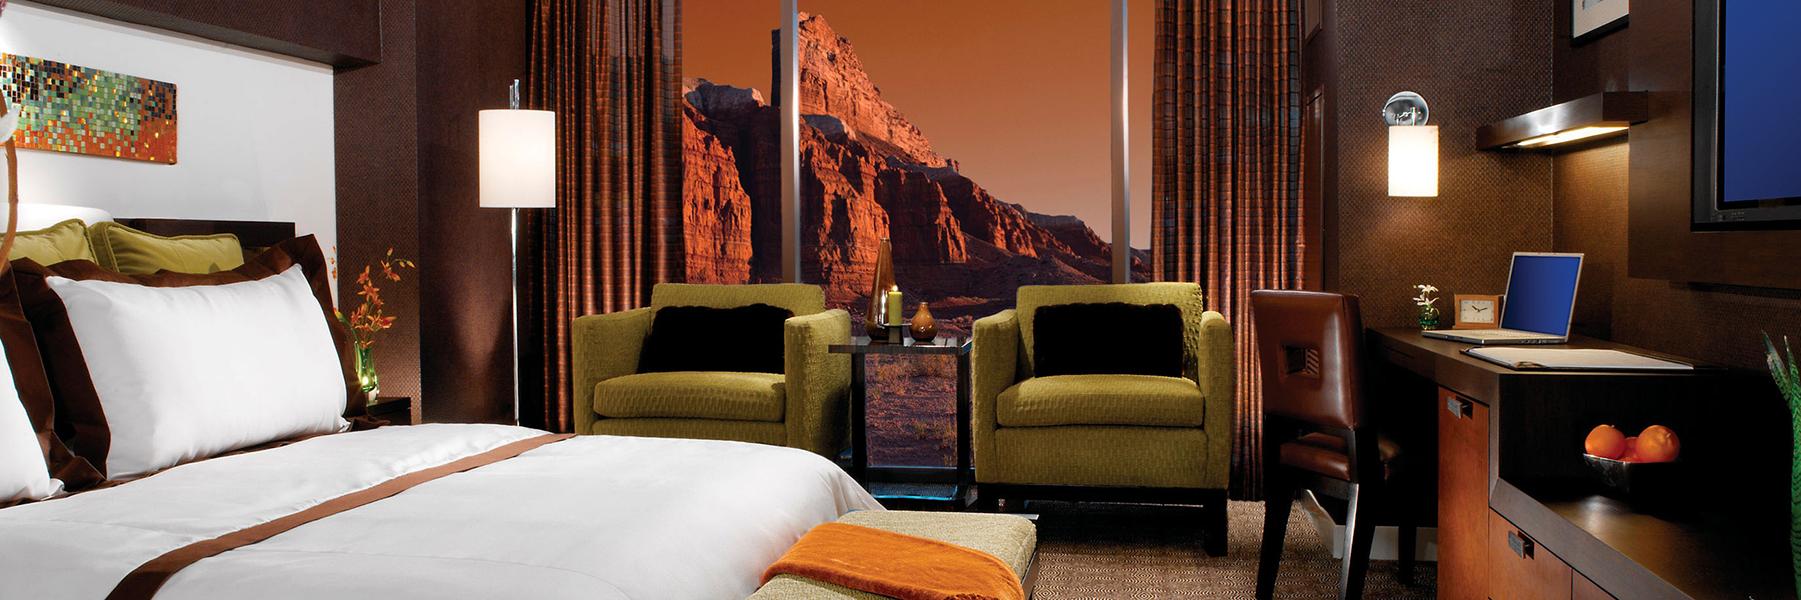 Red Rock Casino Resort Spa room